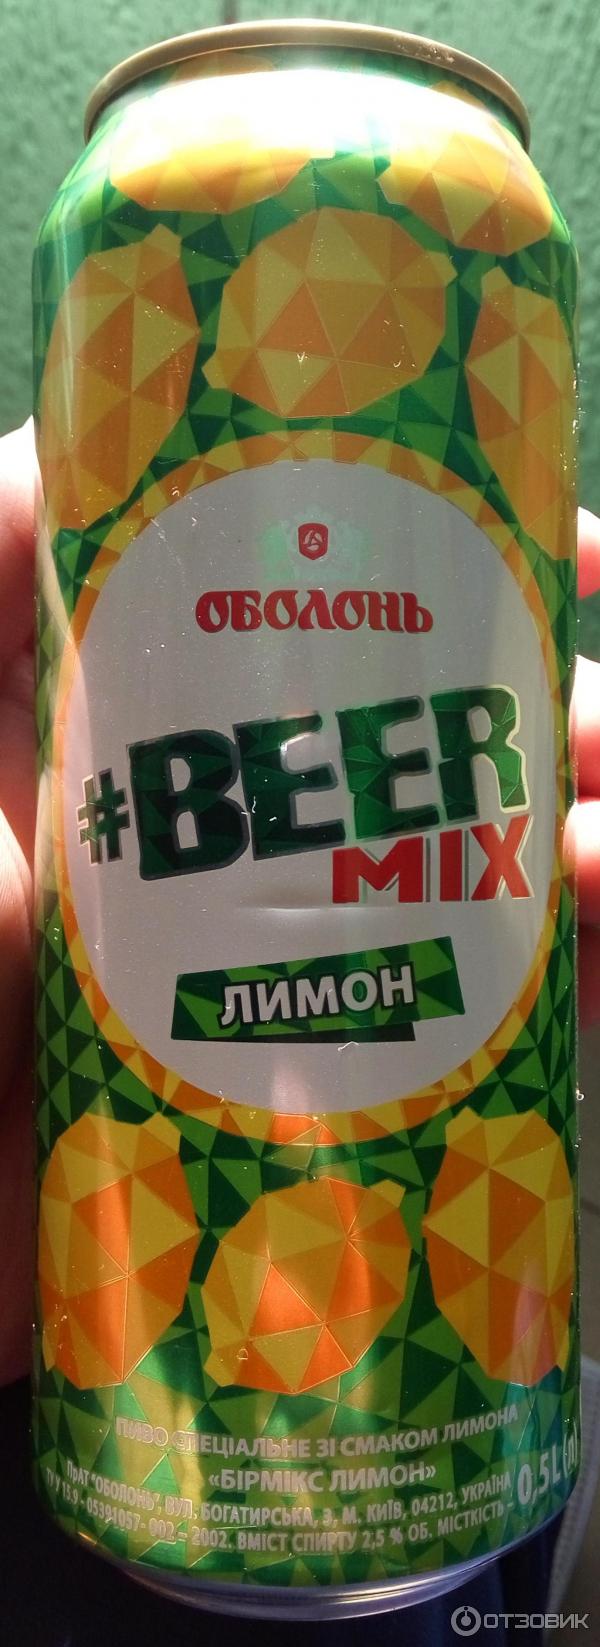 Beer mix. Оболонь Beer Mix. Beer Mix лимон. Оболони напиток. Бирмикс пиво.